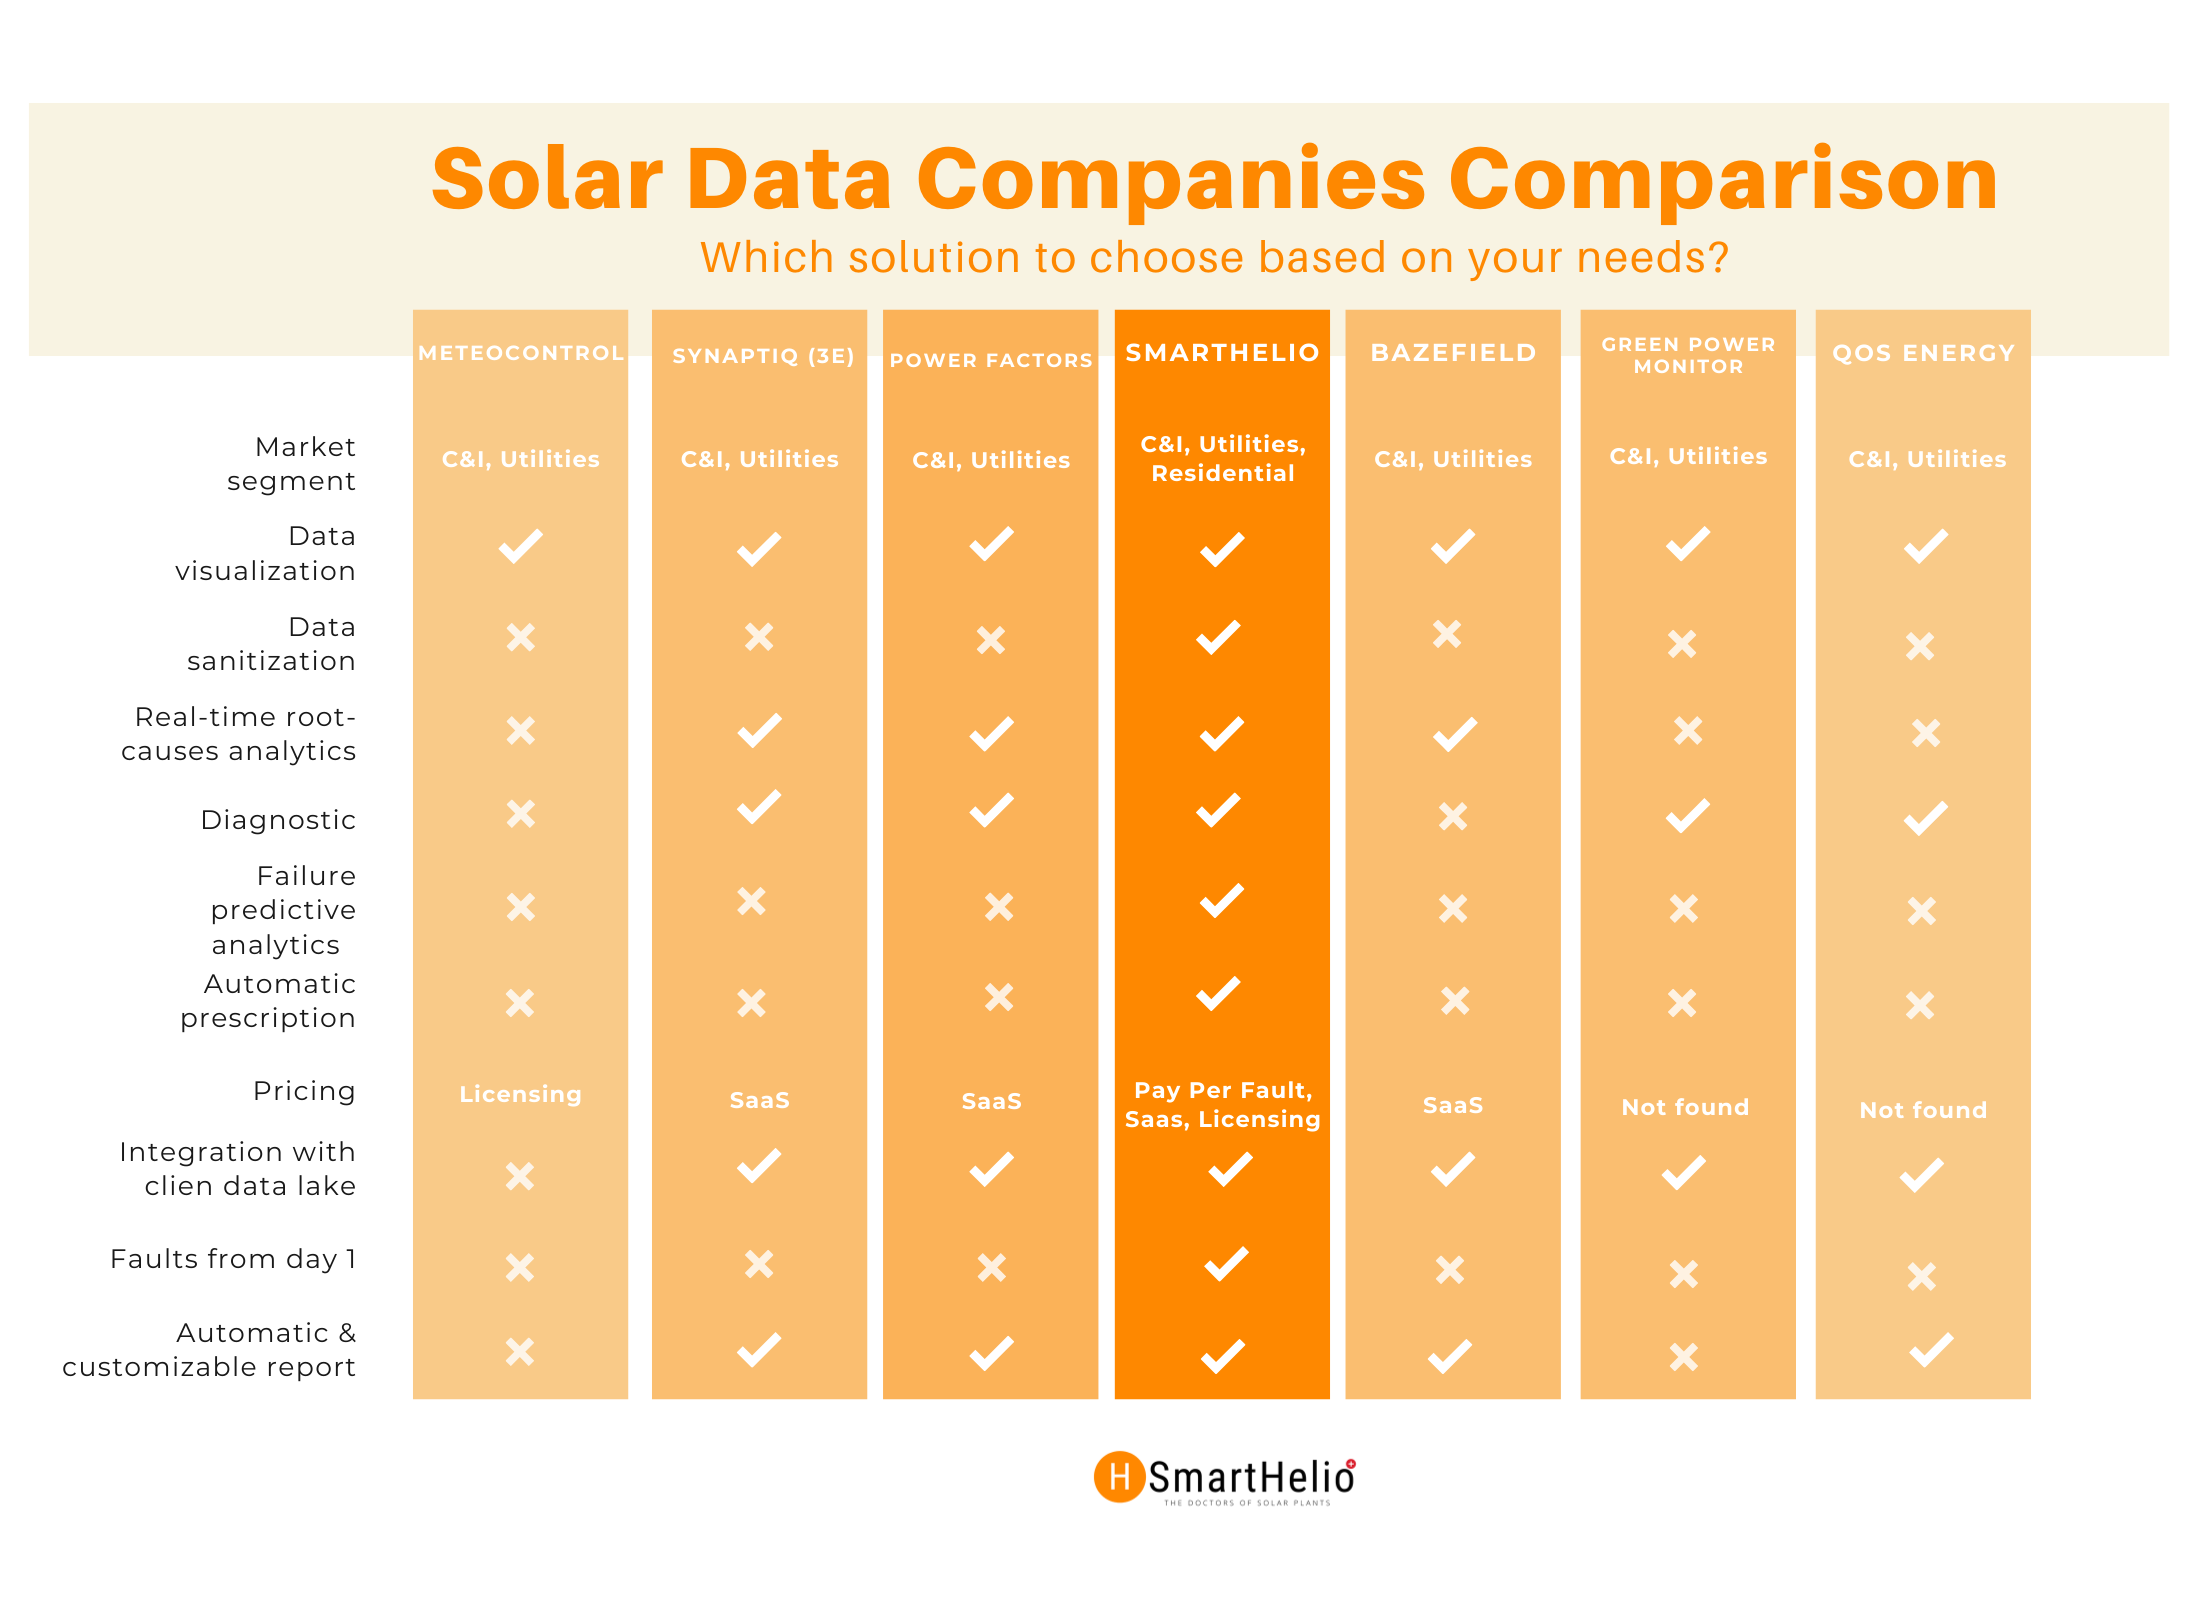 Comparing data solar companies